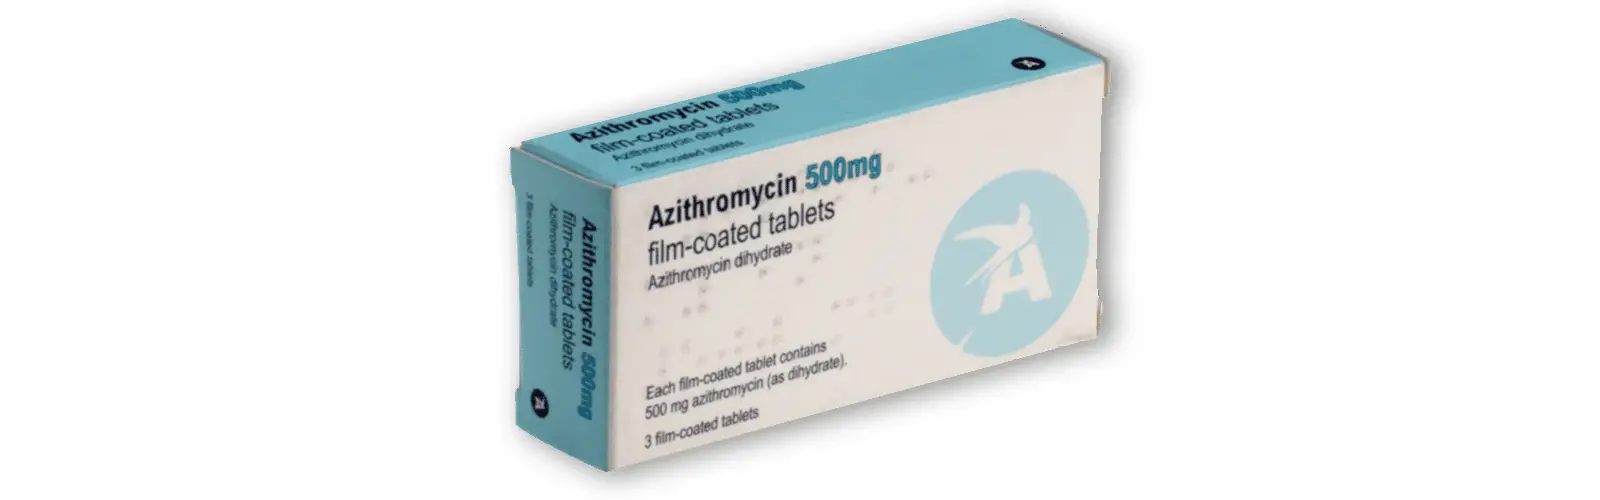 Buy Azithromycin online: description, price, side effects